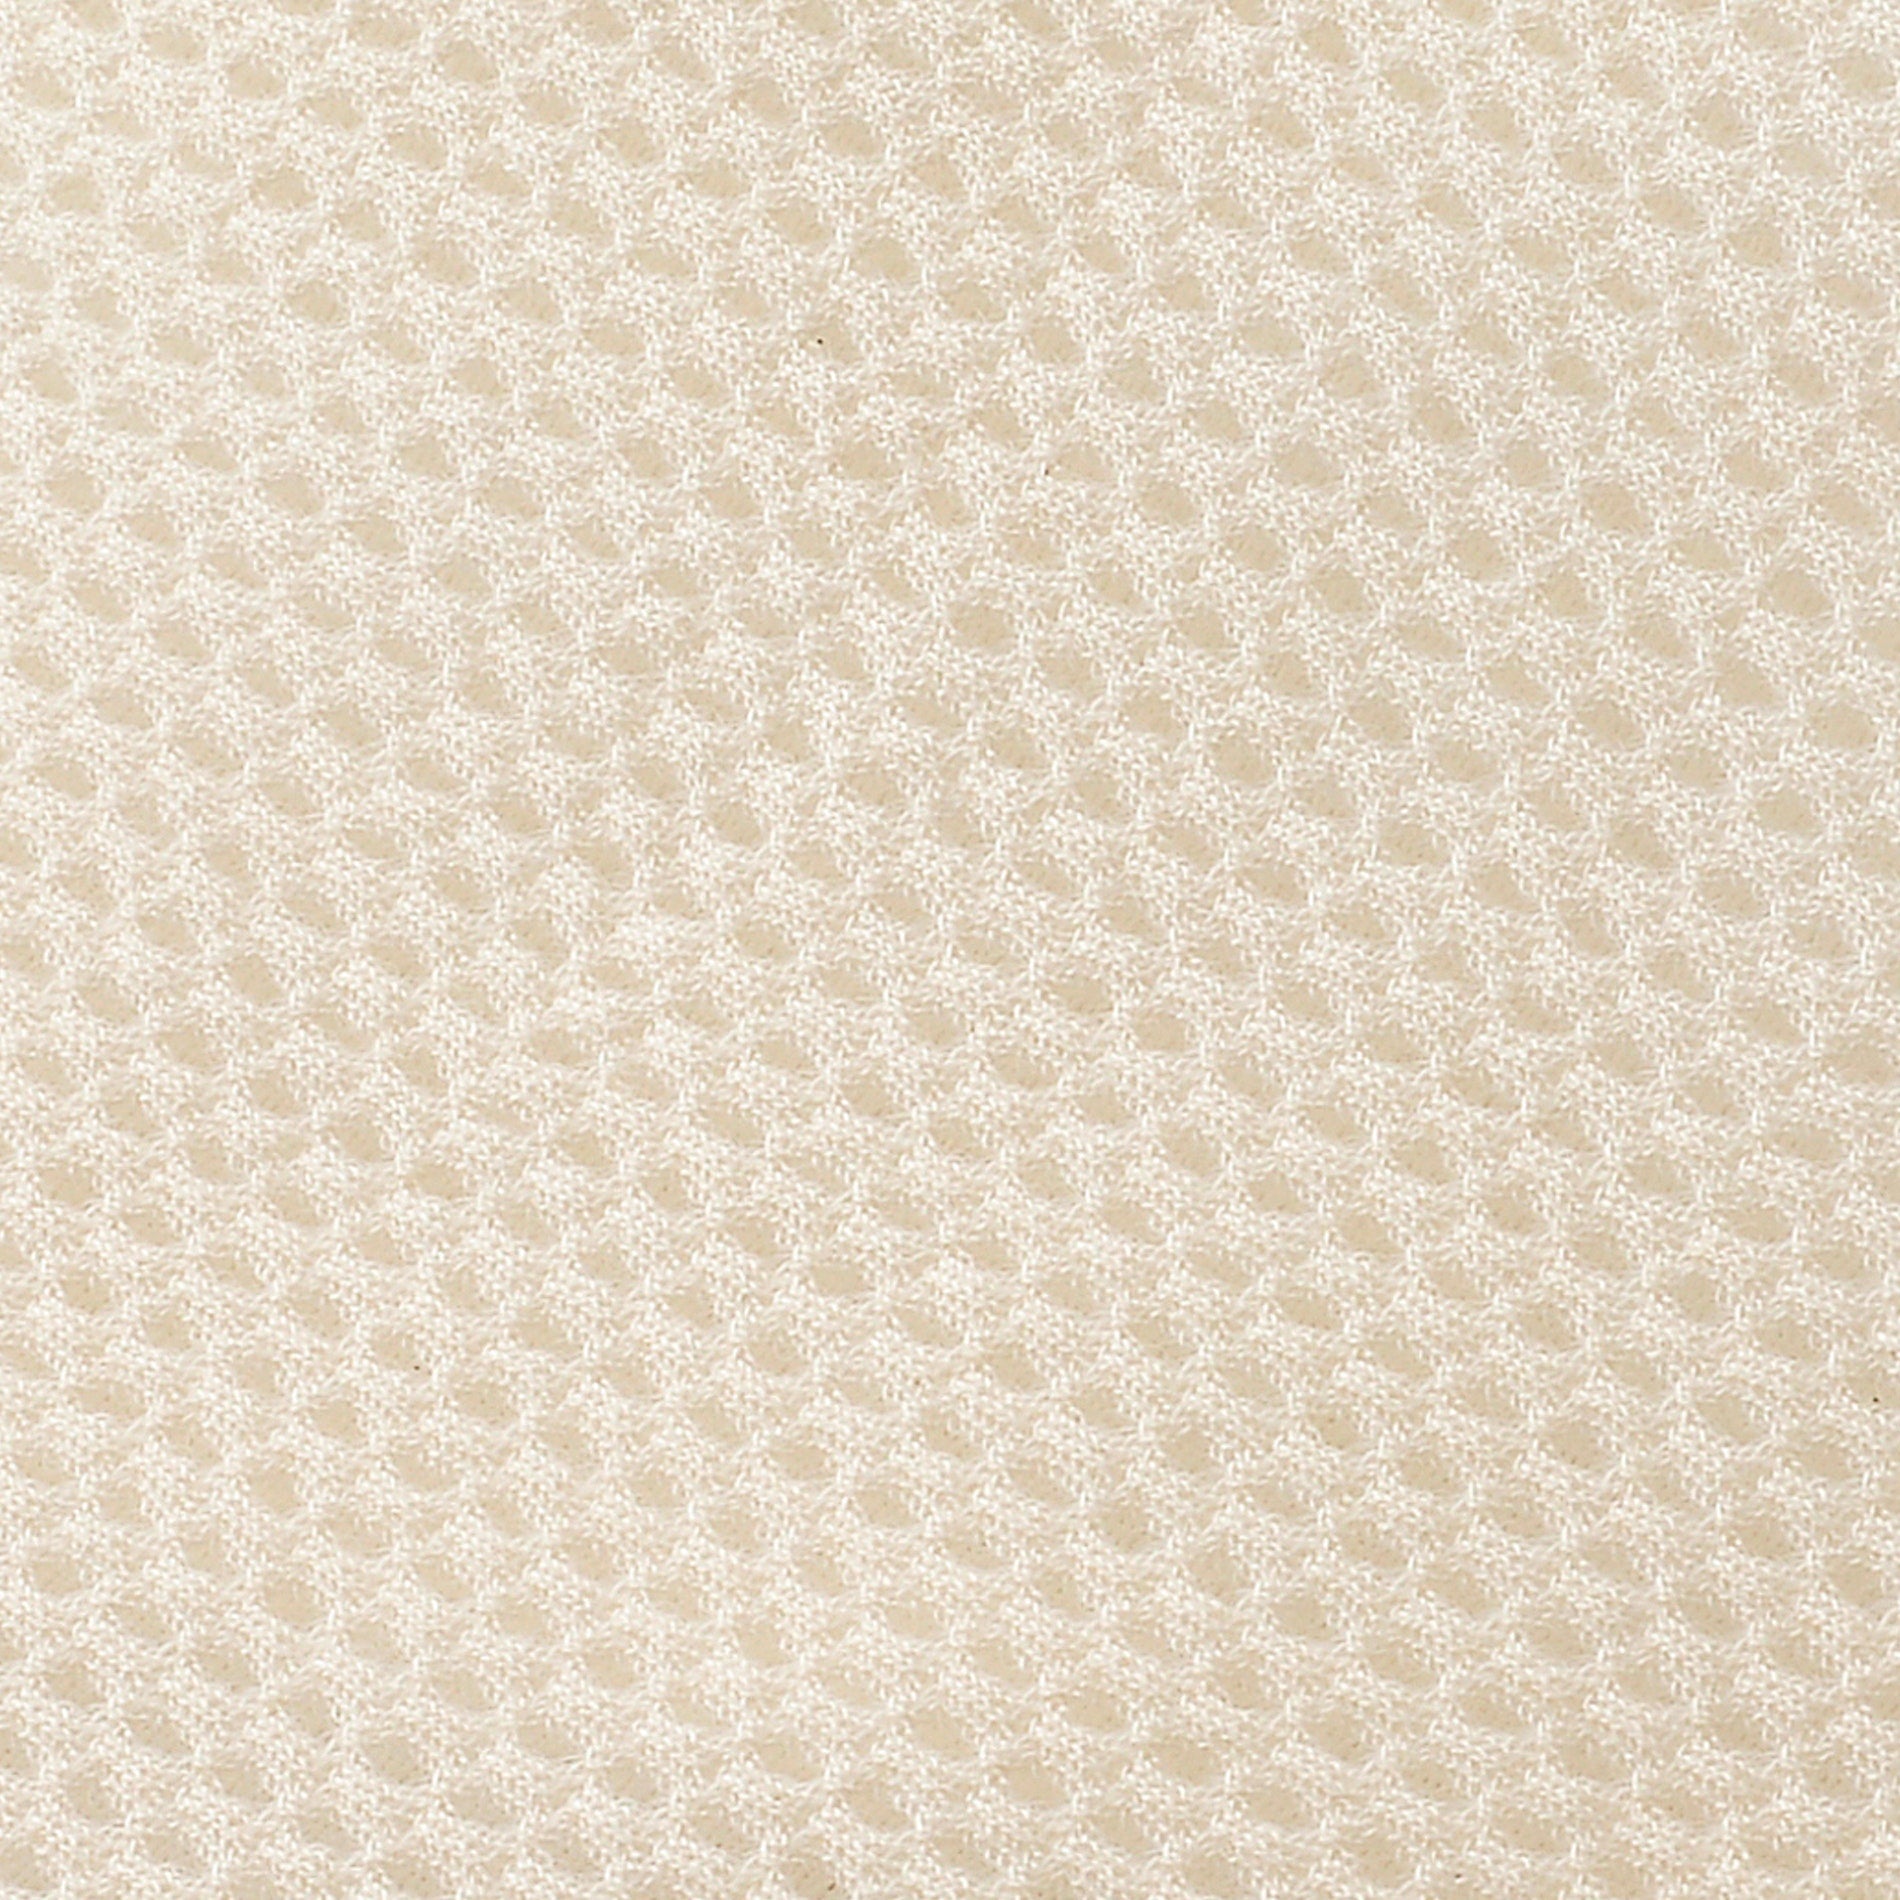 Bétta Honeycomb Liner